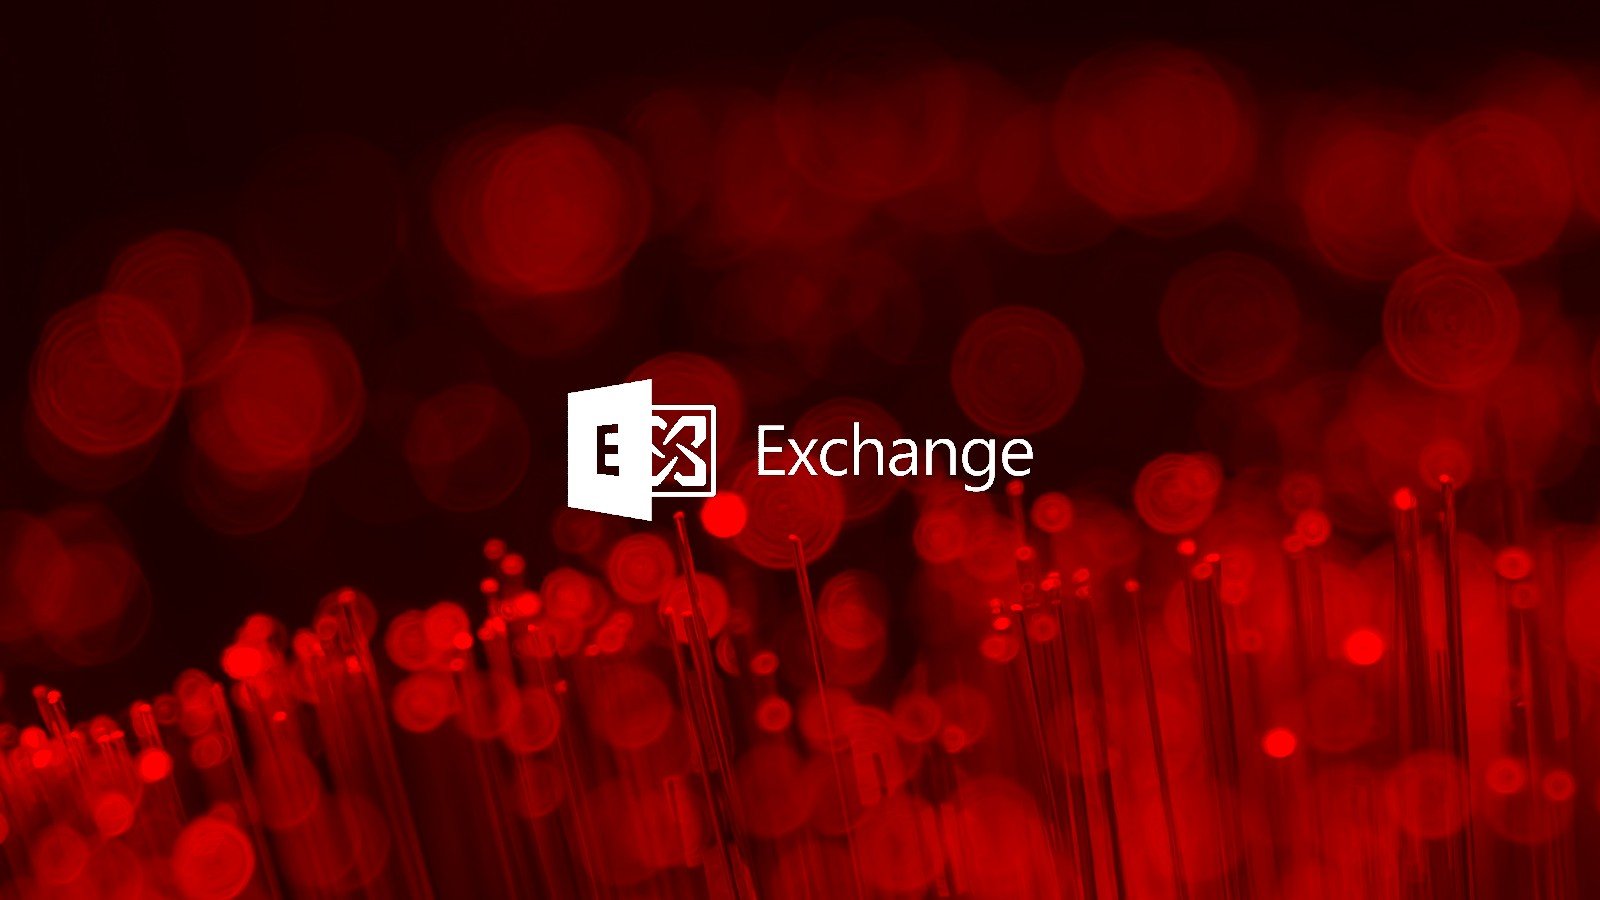 New Microsoft Exchange zero-day actively exploited in attacks - BleepingComputer